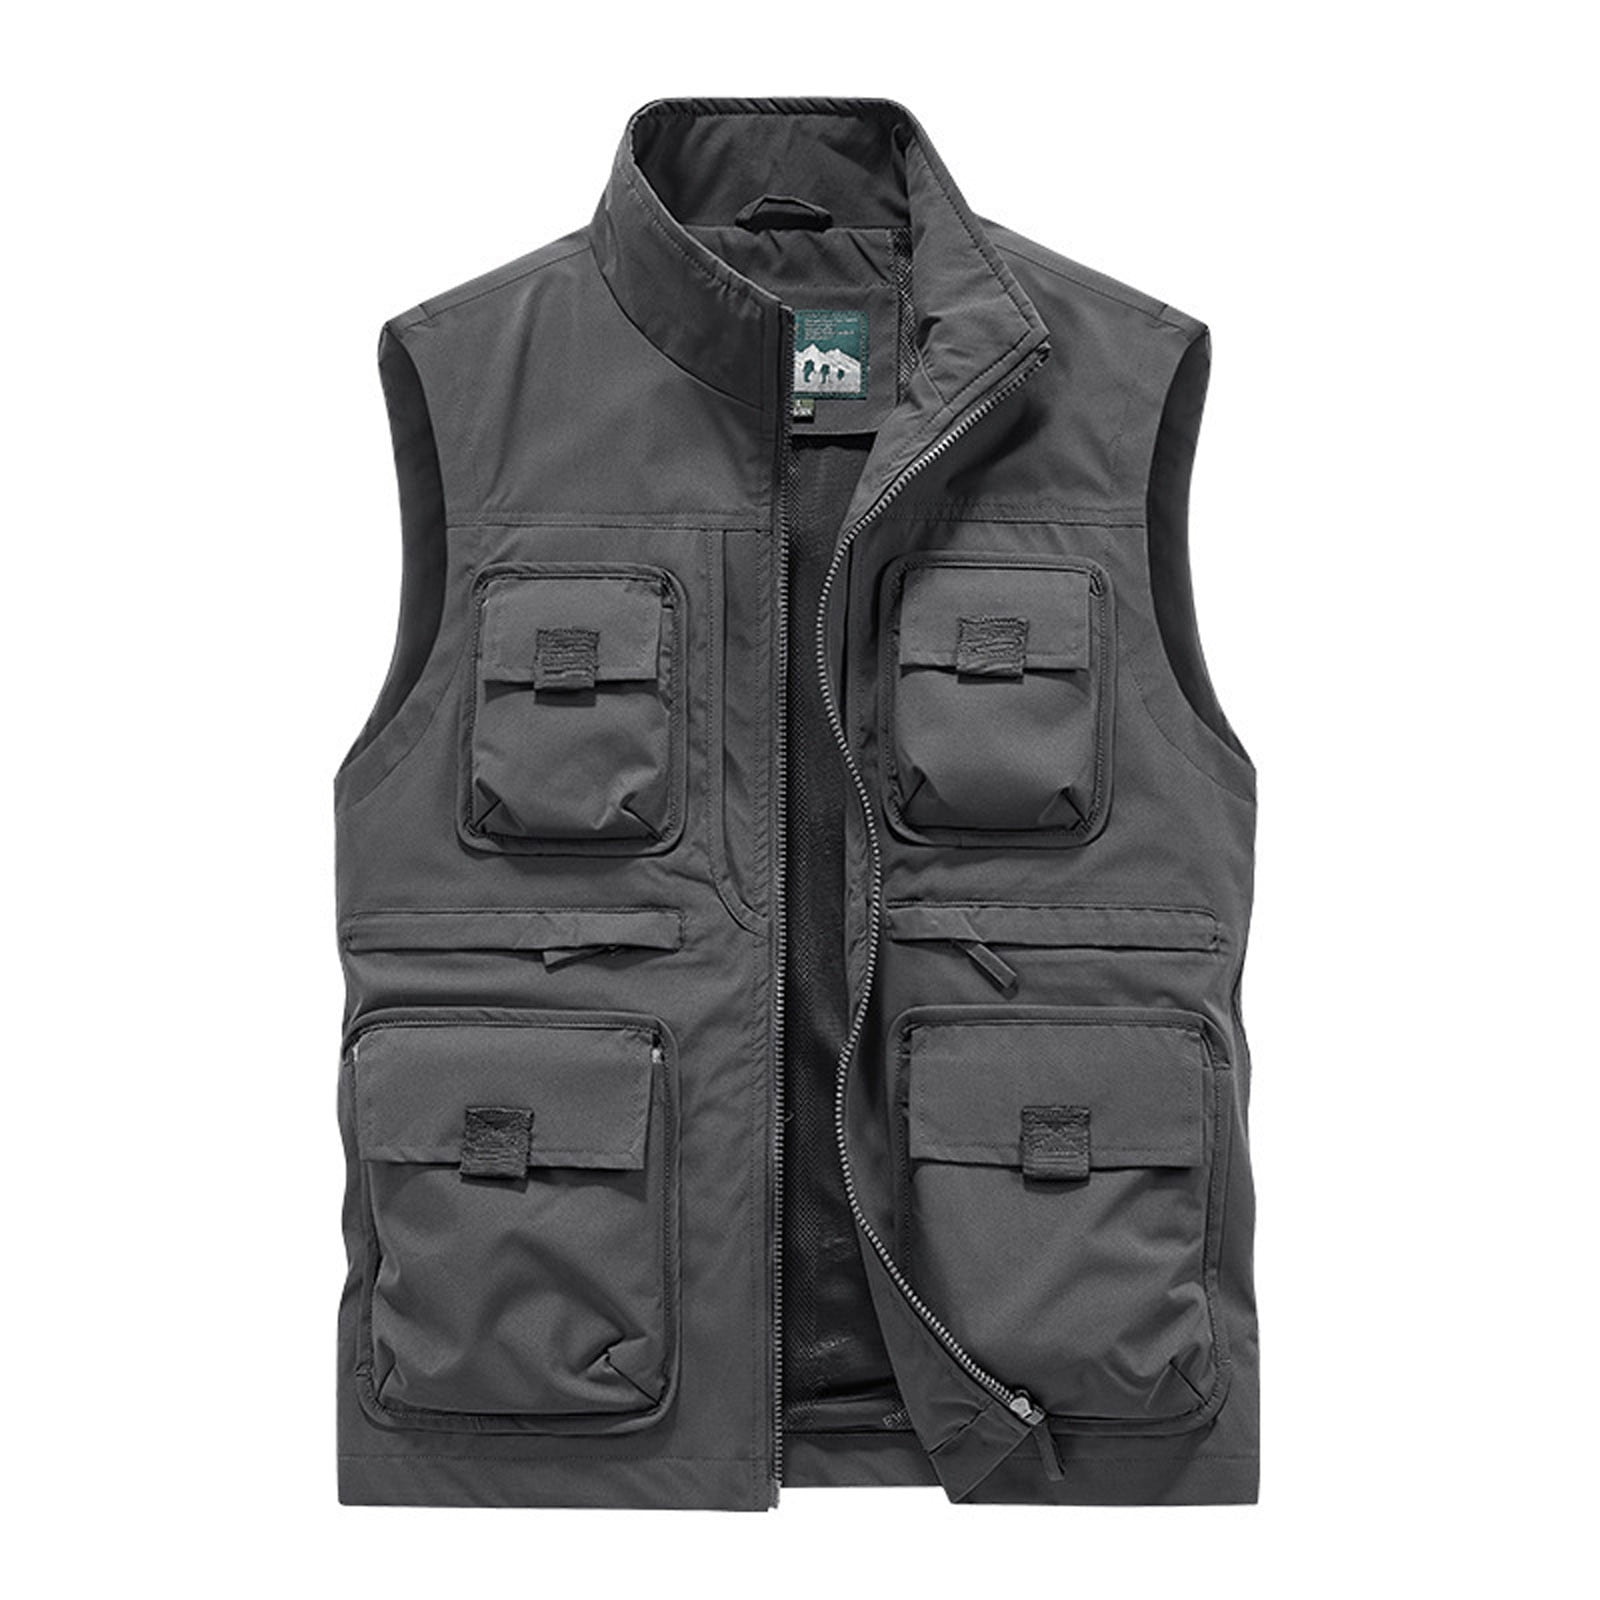 DeHolifer Men's Tops Sleeveless Lightweight Quick Dry Leisure Vest